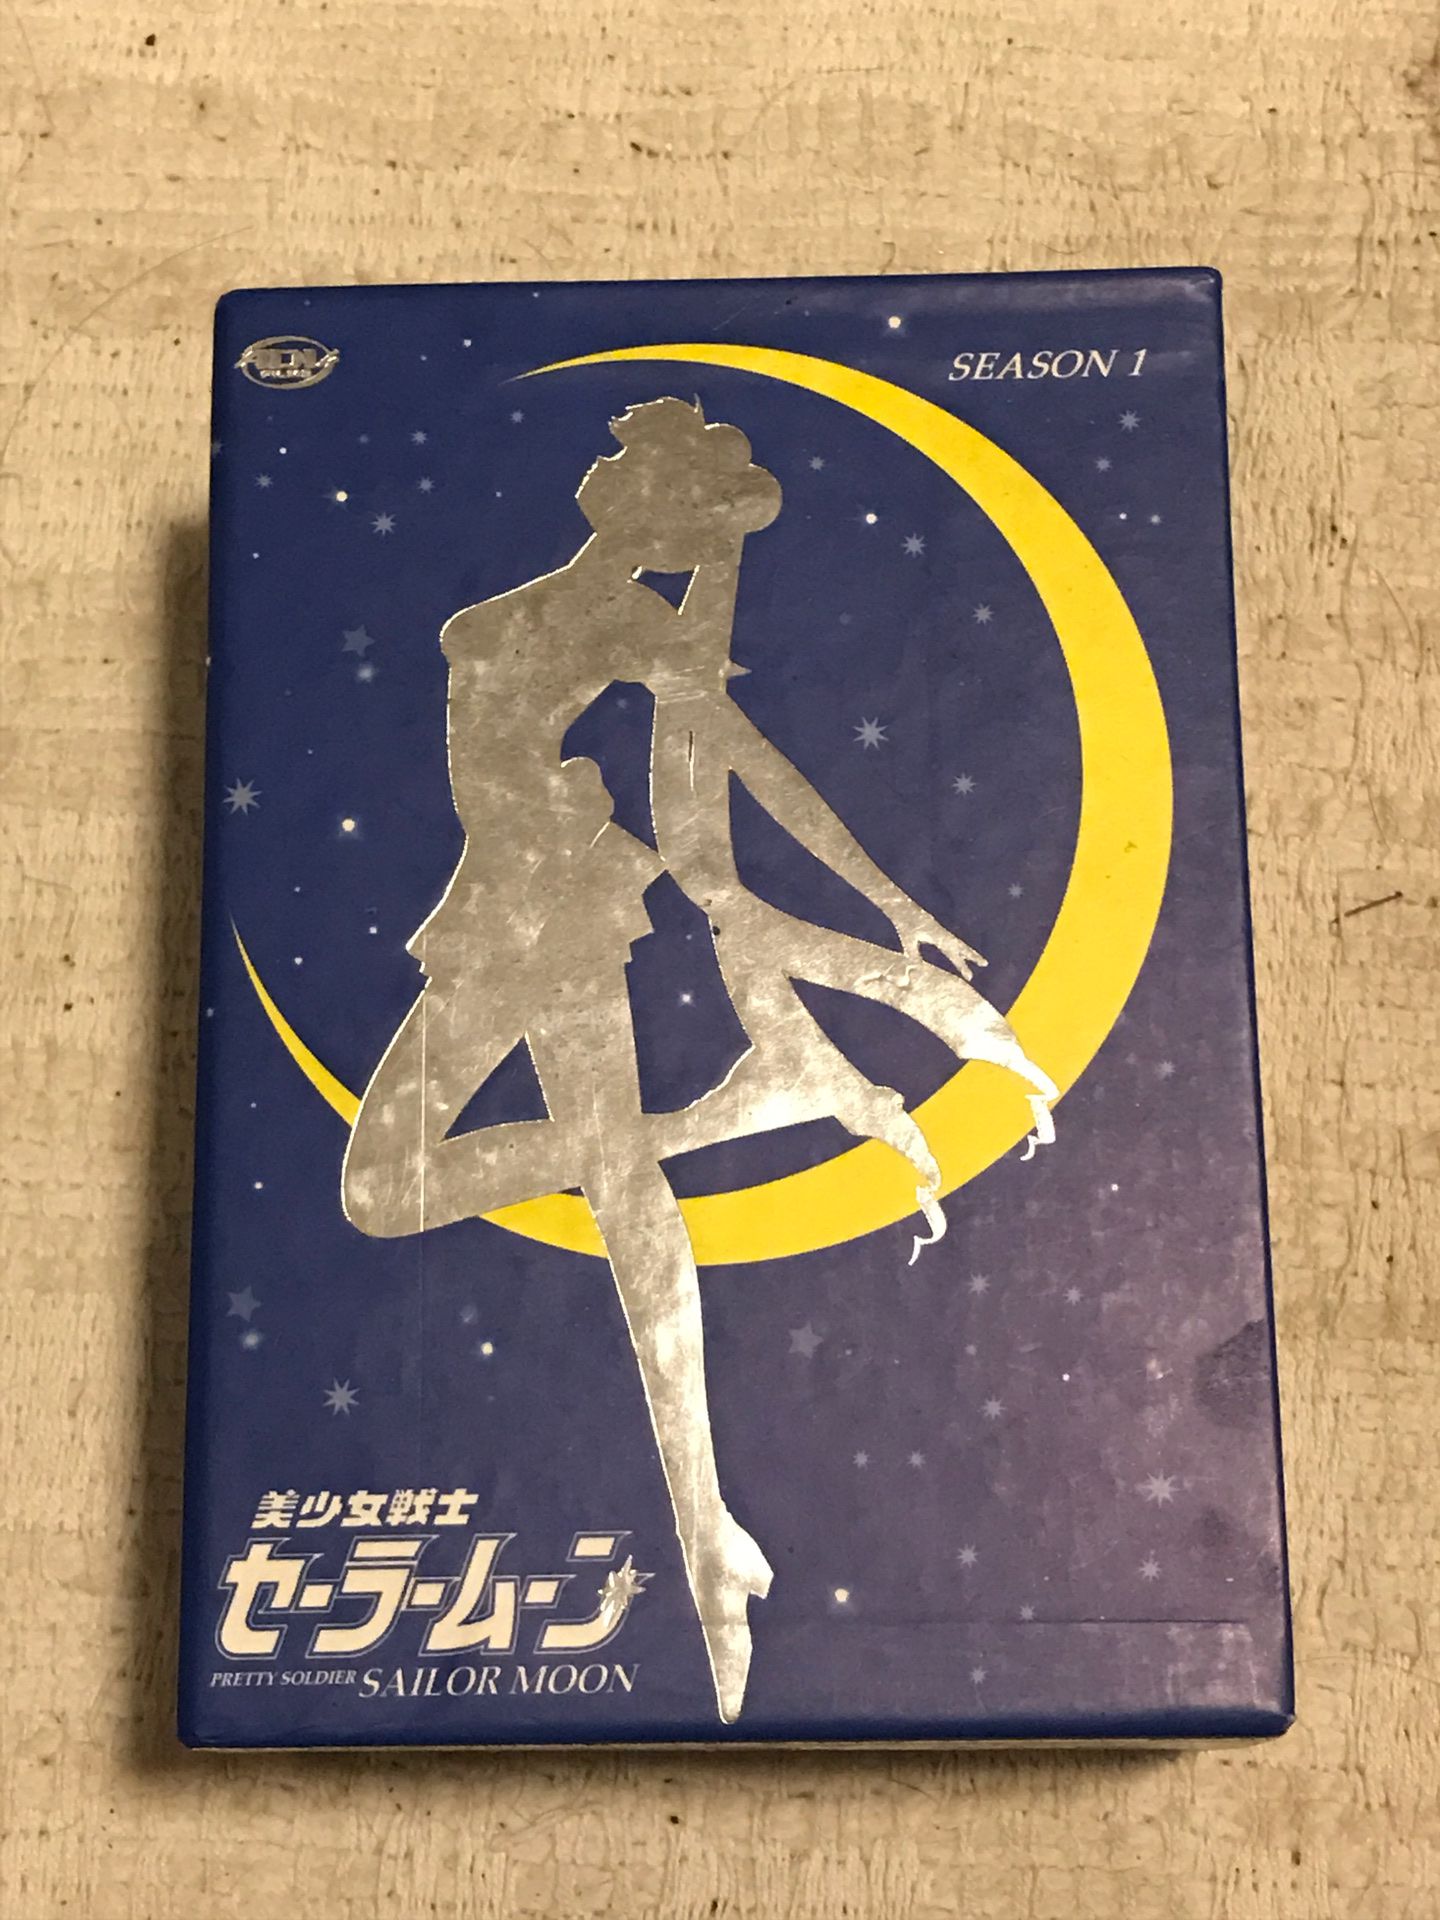 Sailor Moon season 1